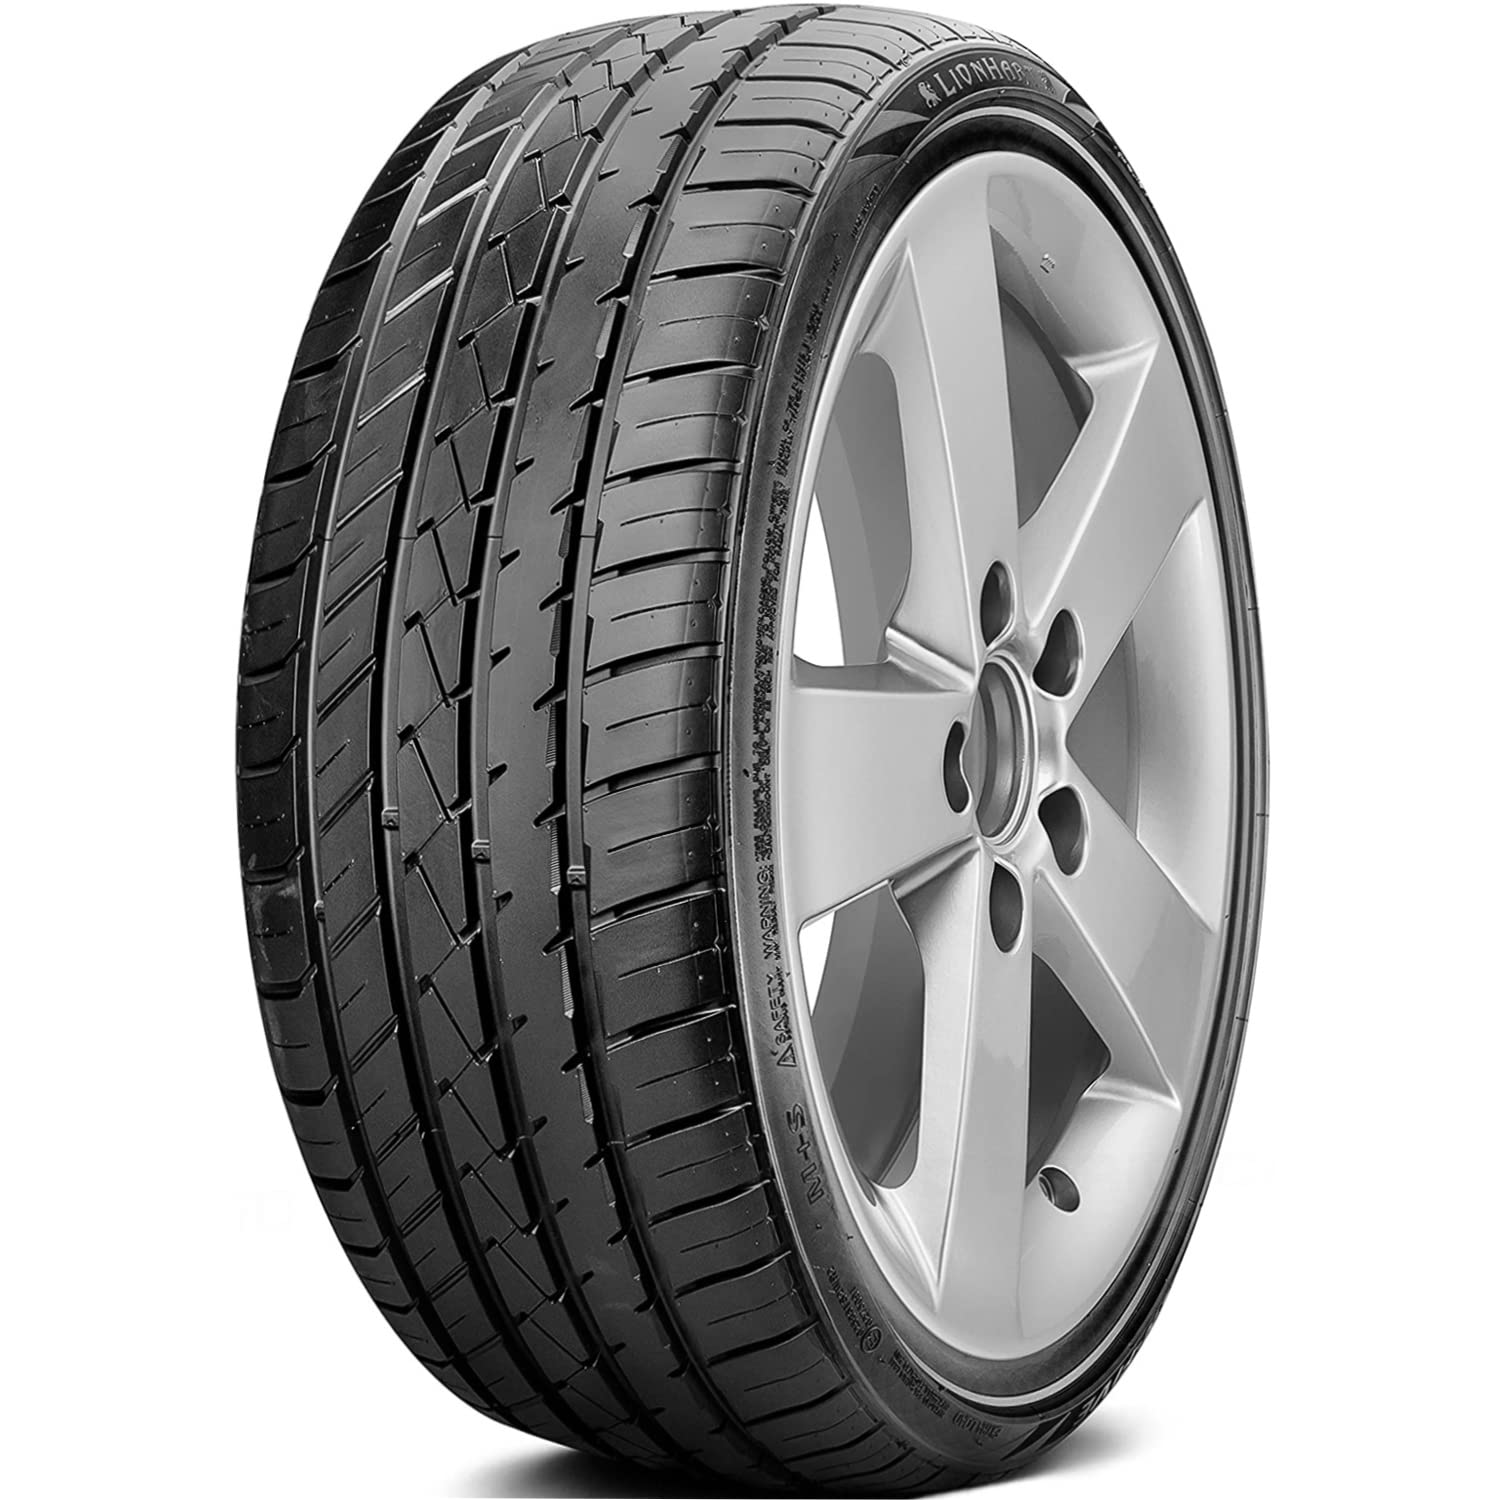 LIONHART LH-FIVE 255/30ZR24 (30.1X10R 24) Tires